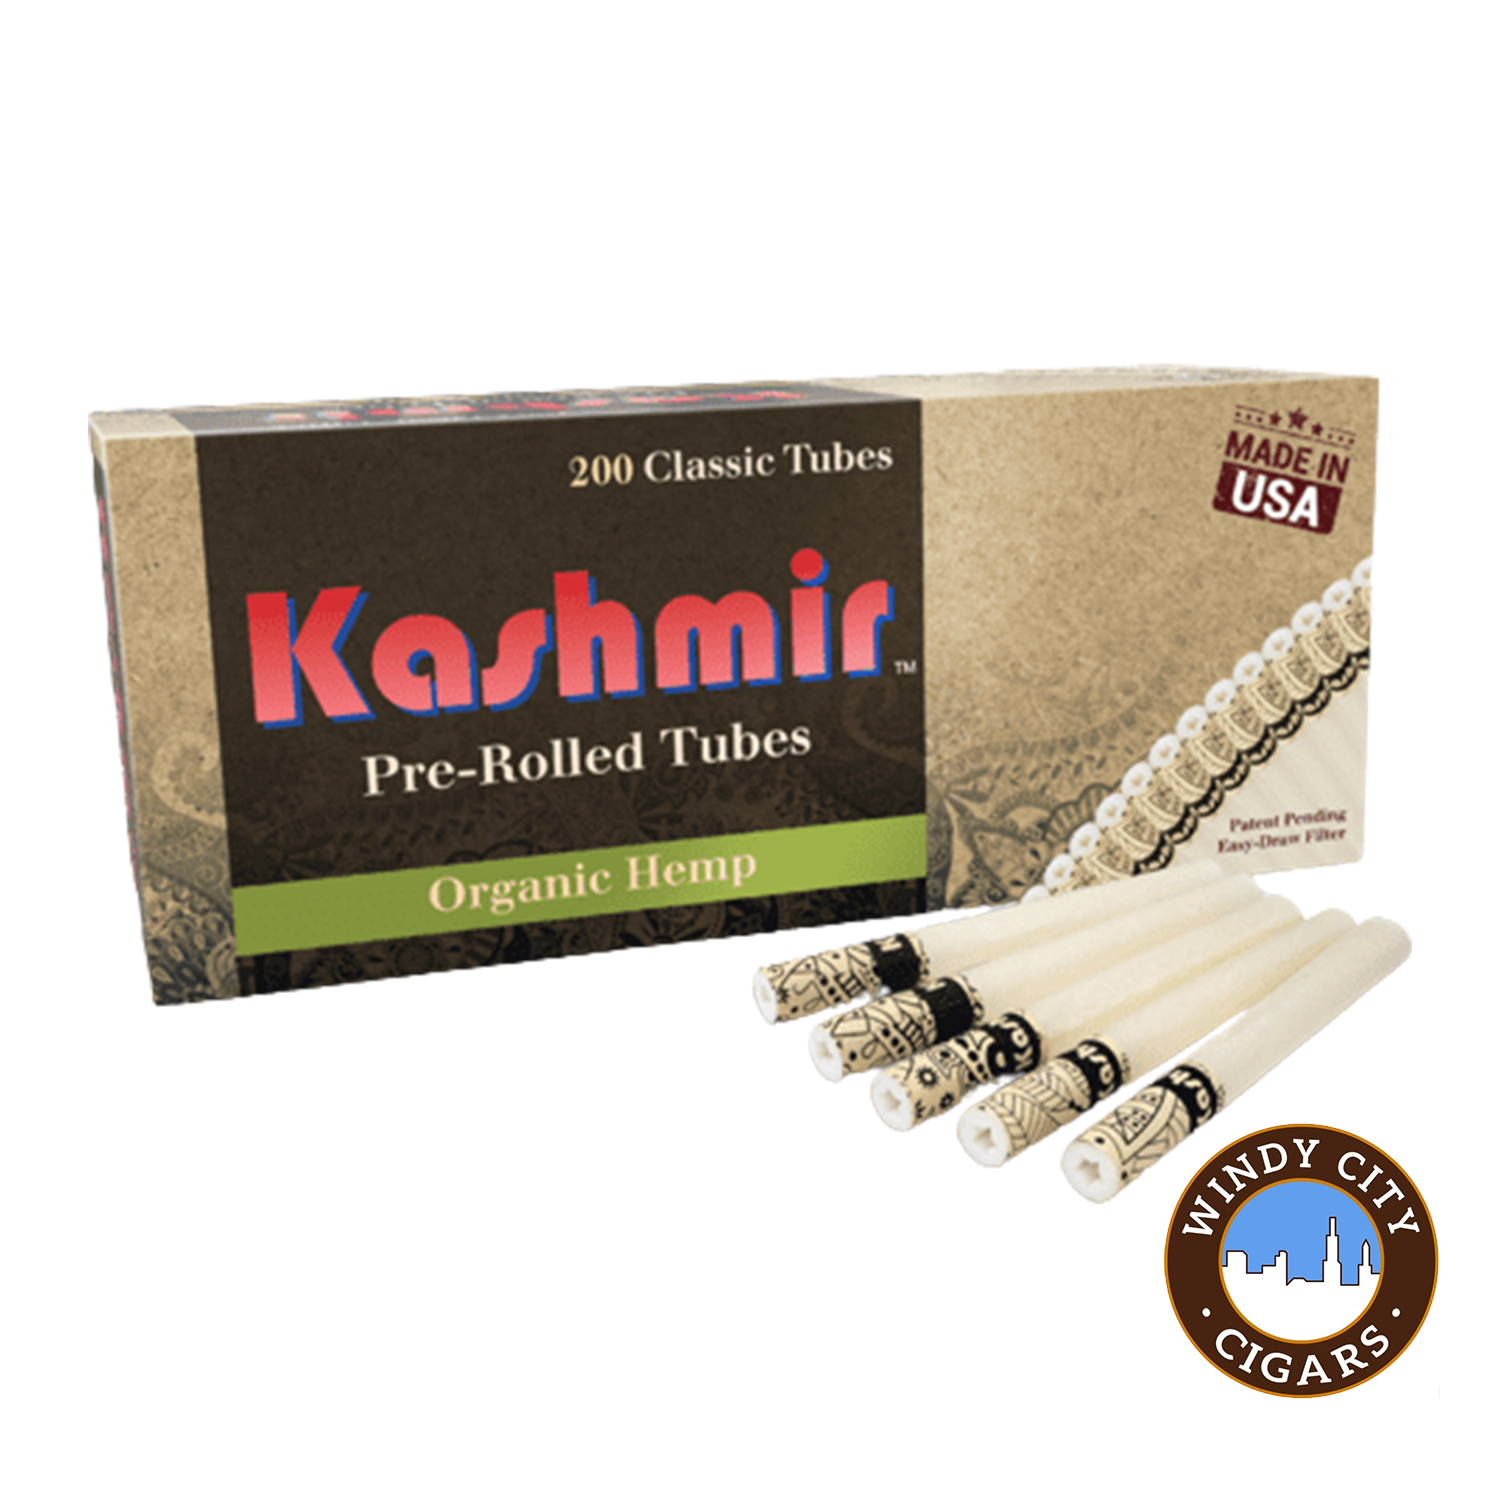 Kashmir Pre-Rolled Cigarette Tubes- Organic Hemp (200ct)